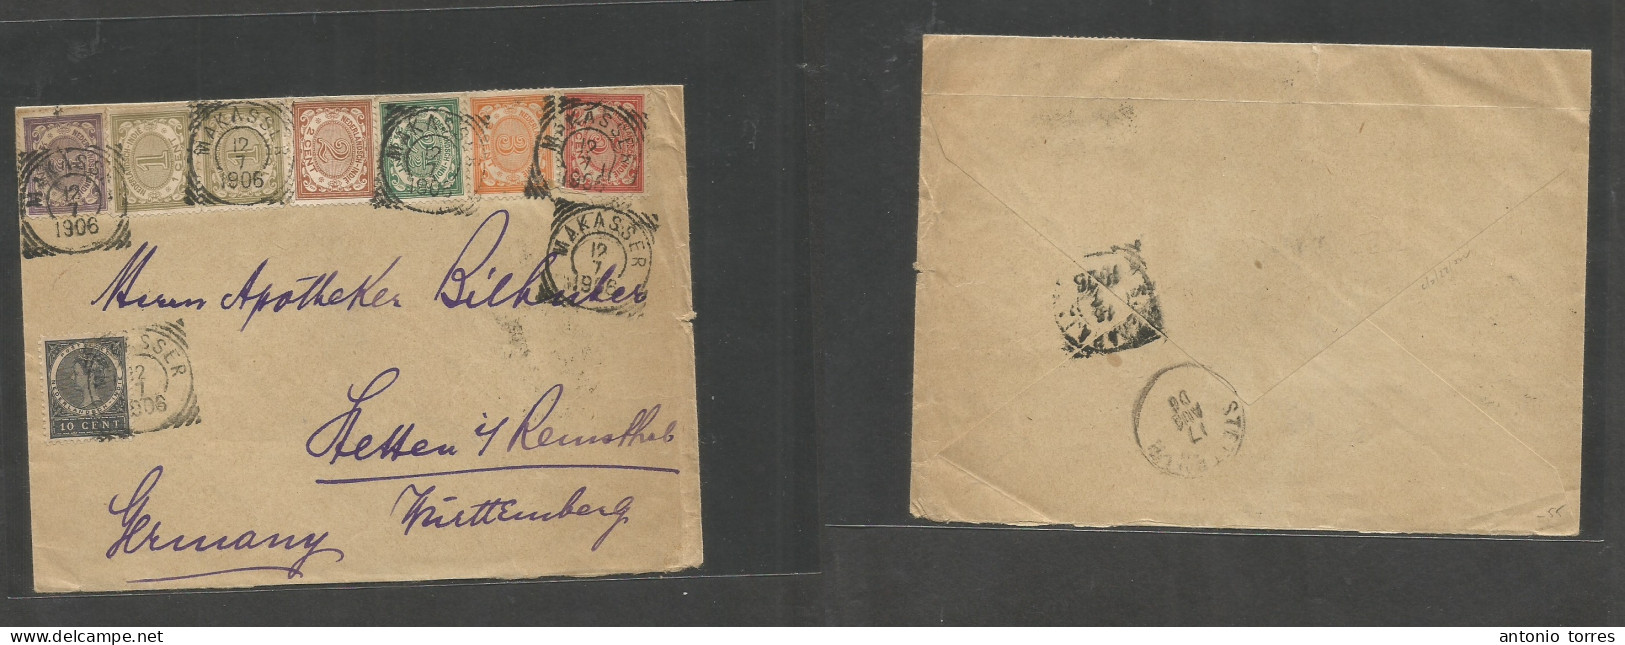 Dutch Indies. 1906 (12 July) Makasser - Germany, Hessen (17 Aug) Multicolor (8 Diff) Fkd Envelope, Tied Cds. VF. - Netherlands Indies